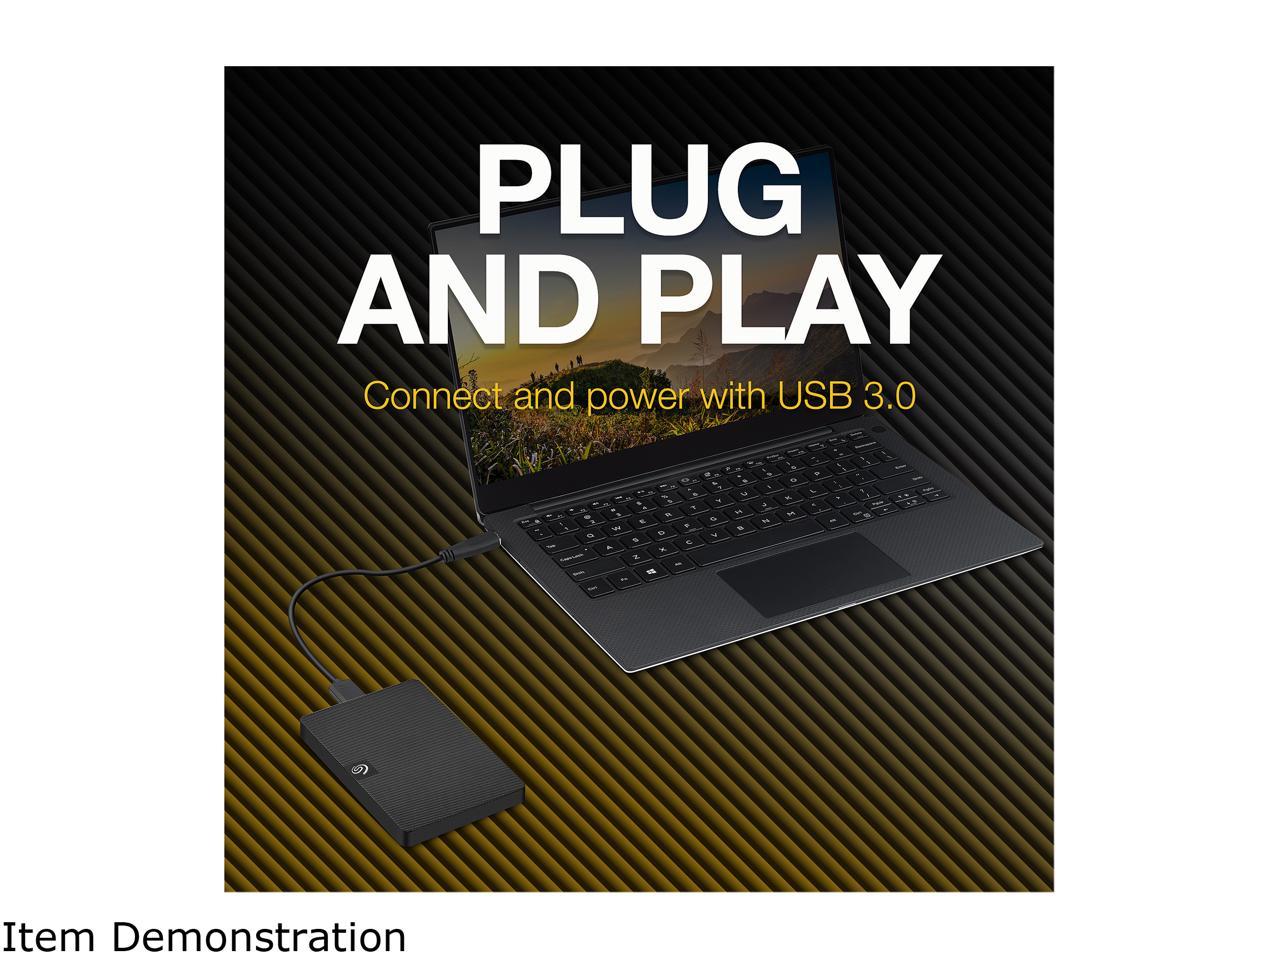 Seagate Expansion Portable, 1 To, Disque dur externe HDD, USB 3.0 pour PC  portable